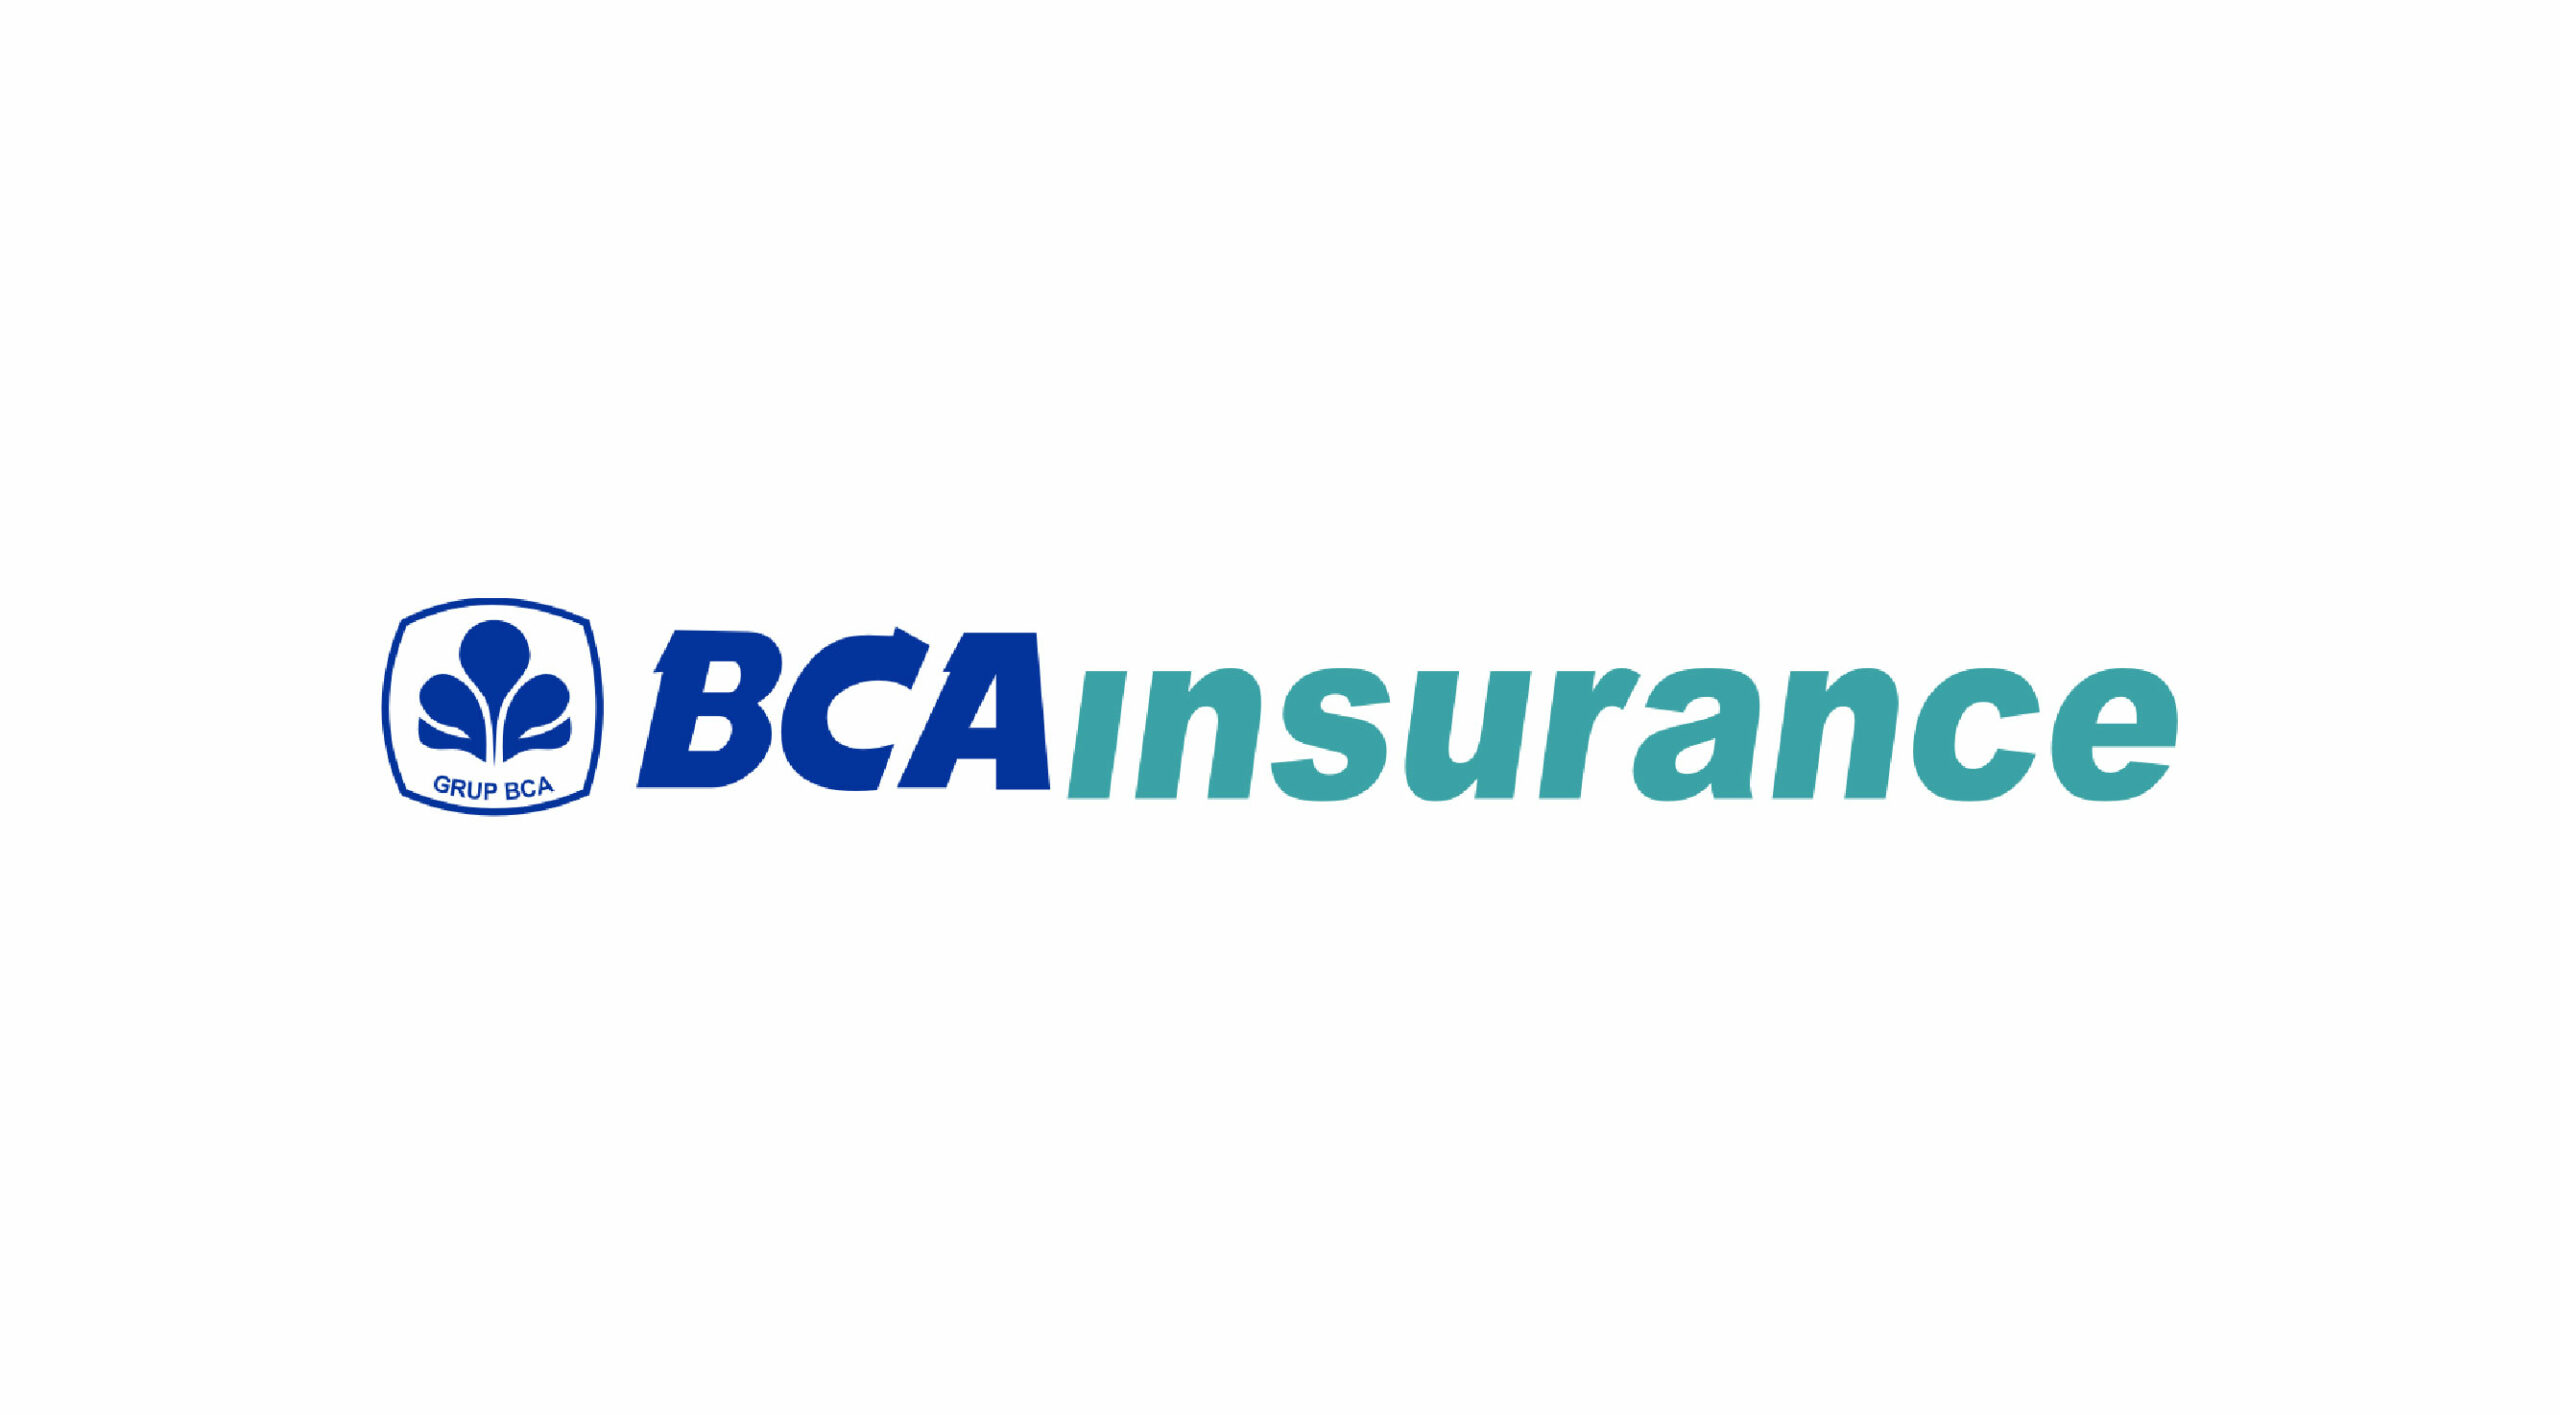 PT-Asuransi-Umum-BCA-BCA-Insurance-04-scaled.jpg (2560×1415)